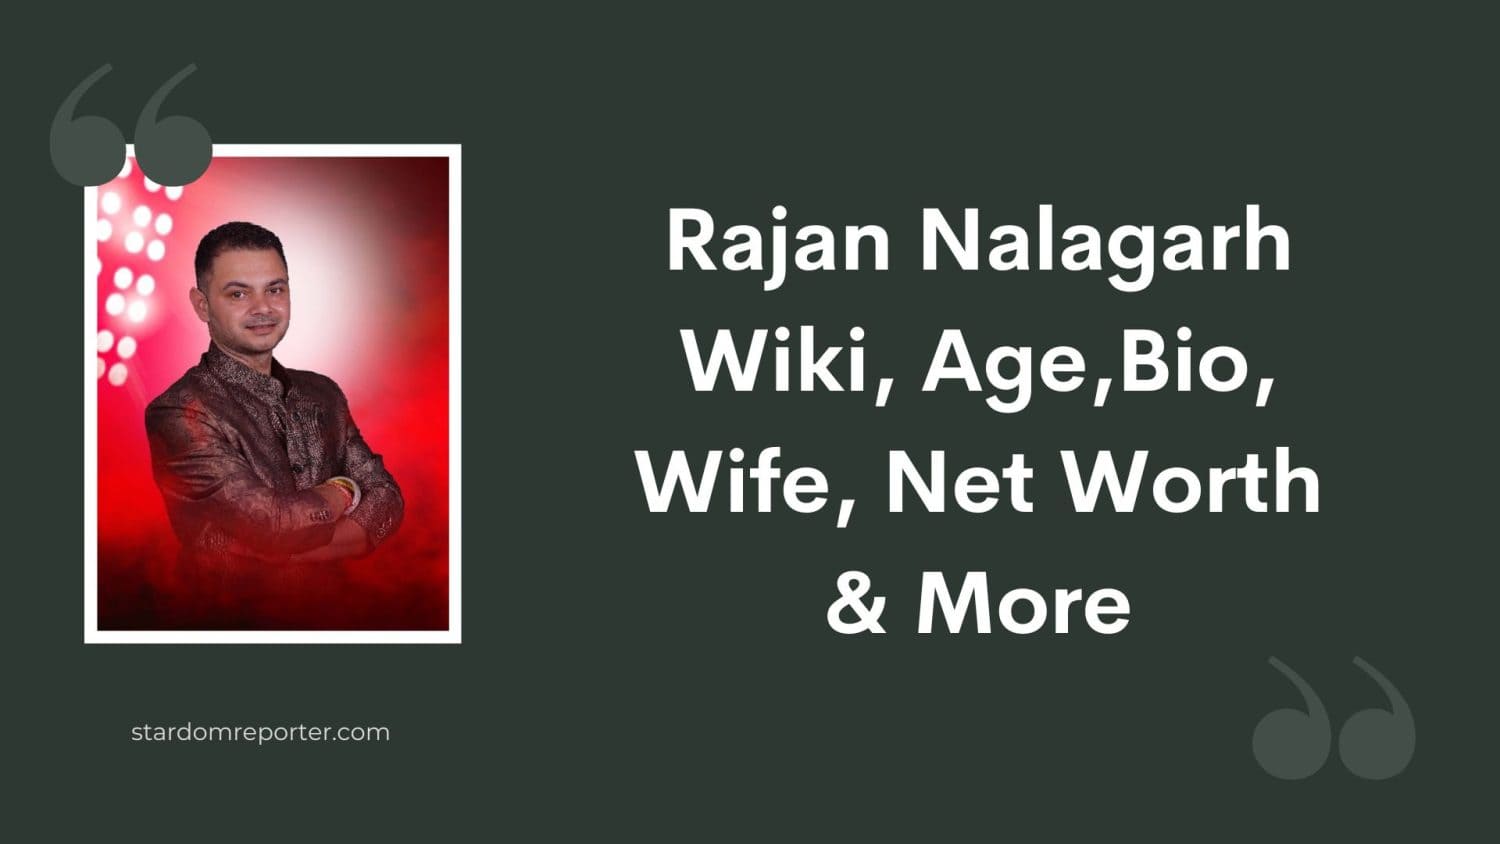 Rajan Nalagarh Wiki, Age, Bio, Wife, Net Worth & More - 27